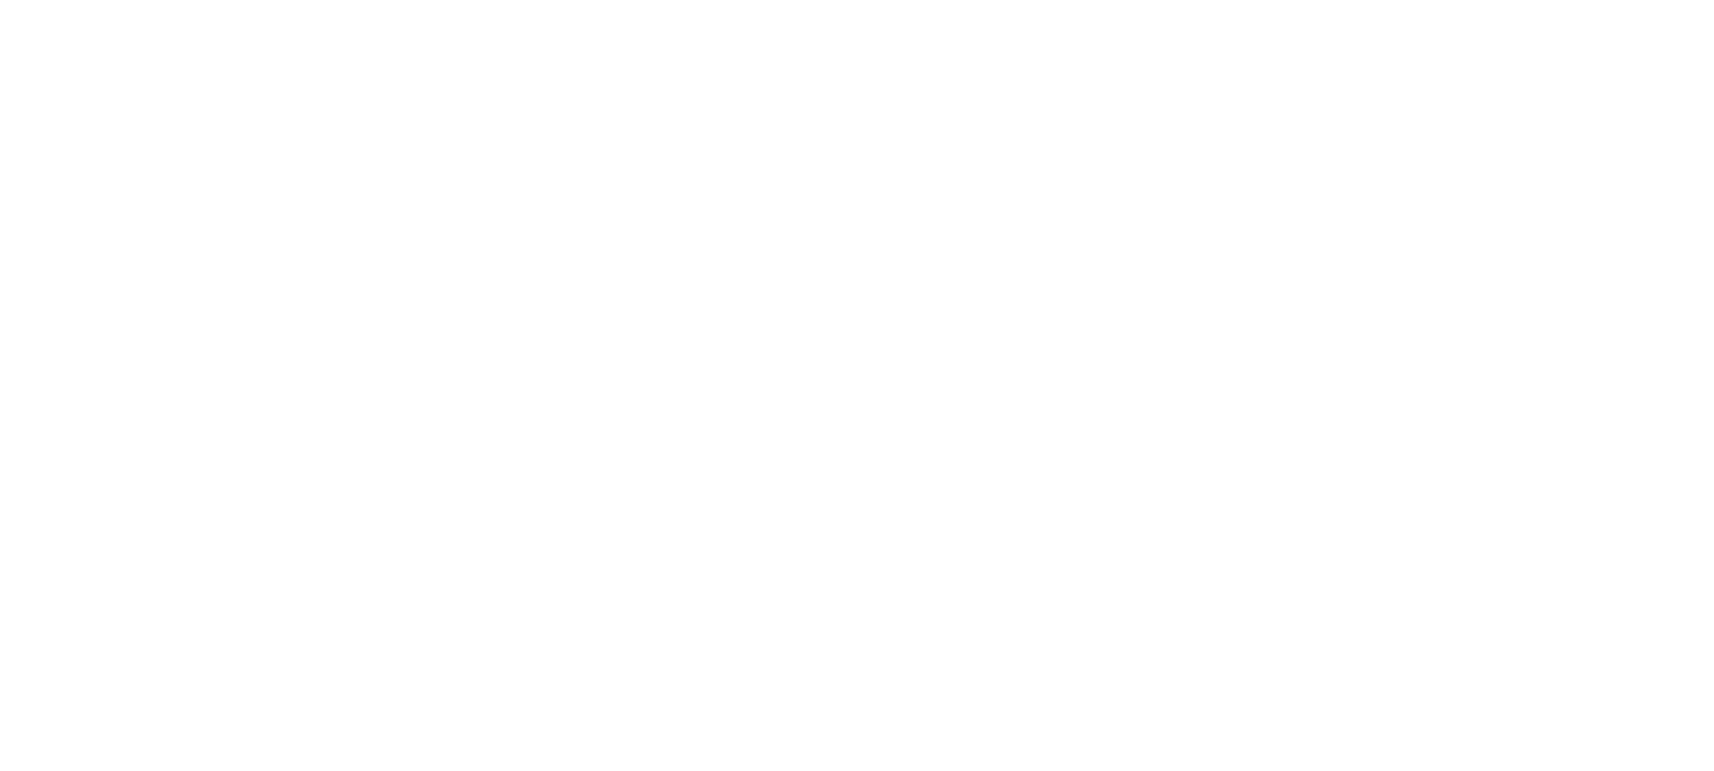 Kiwa PVEL Logo - White